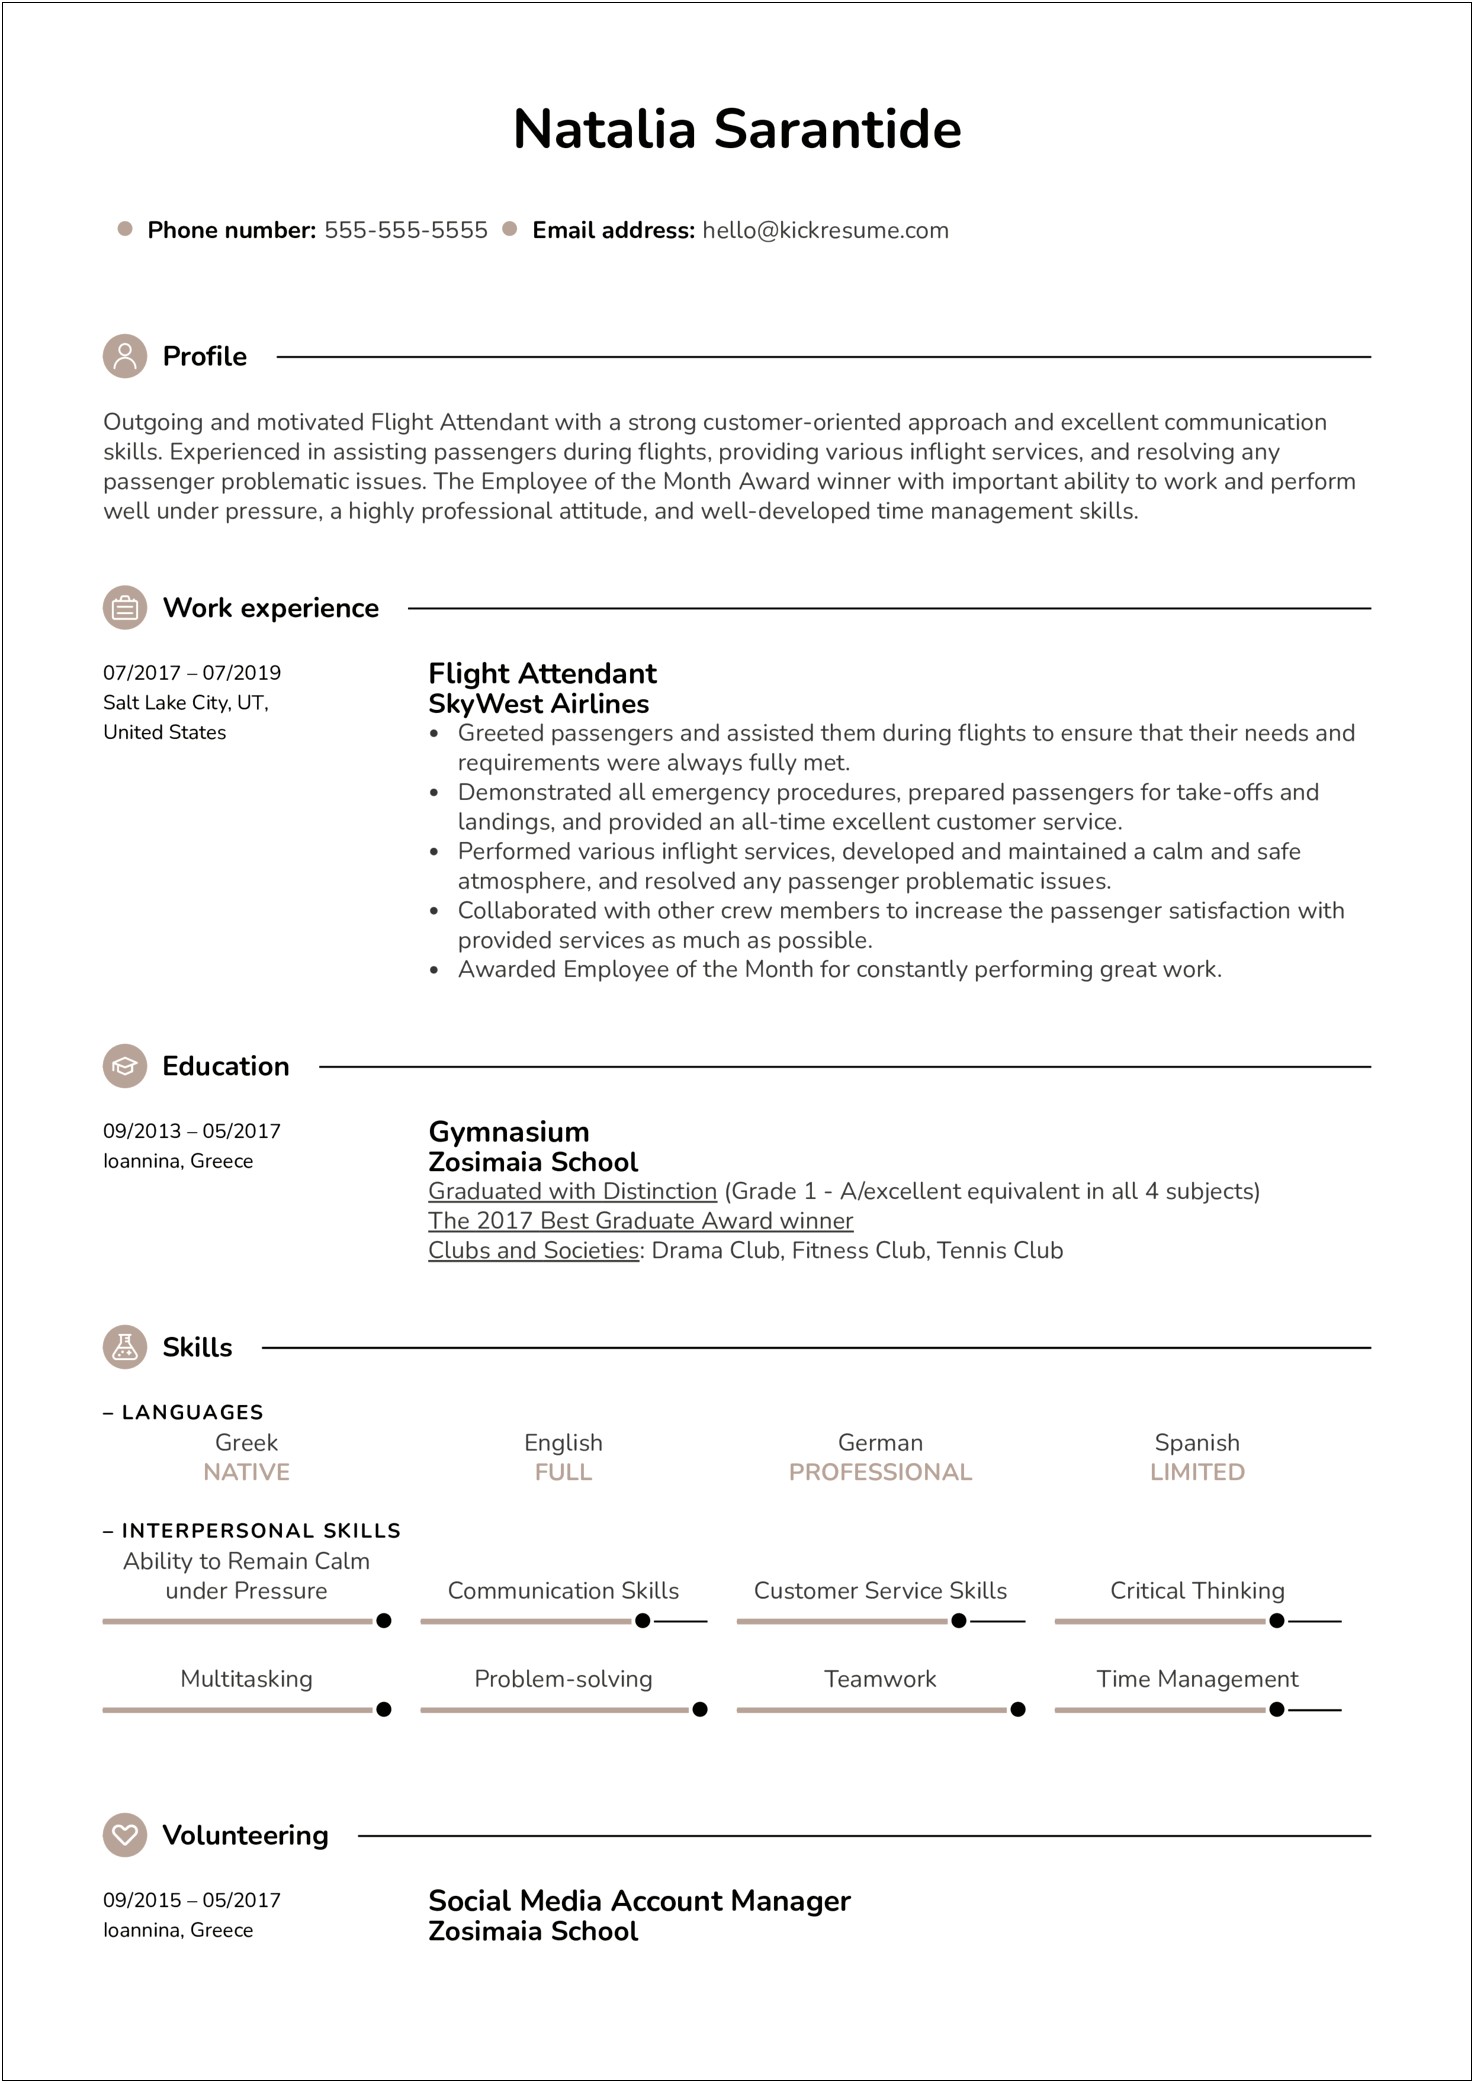 Resume Job Description Examples Aviation